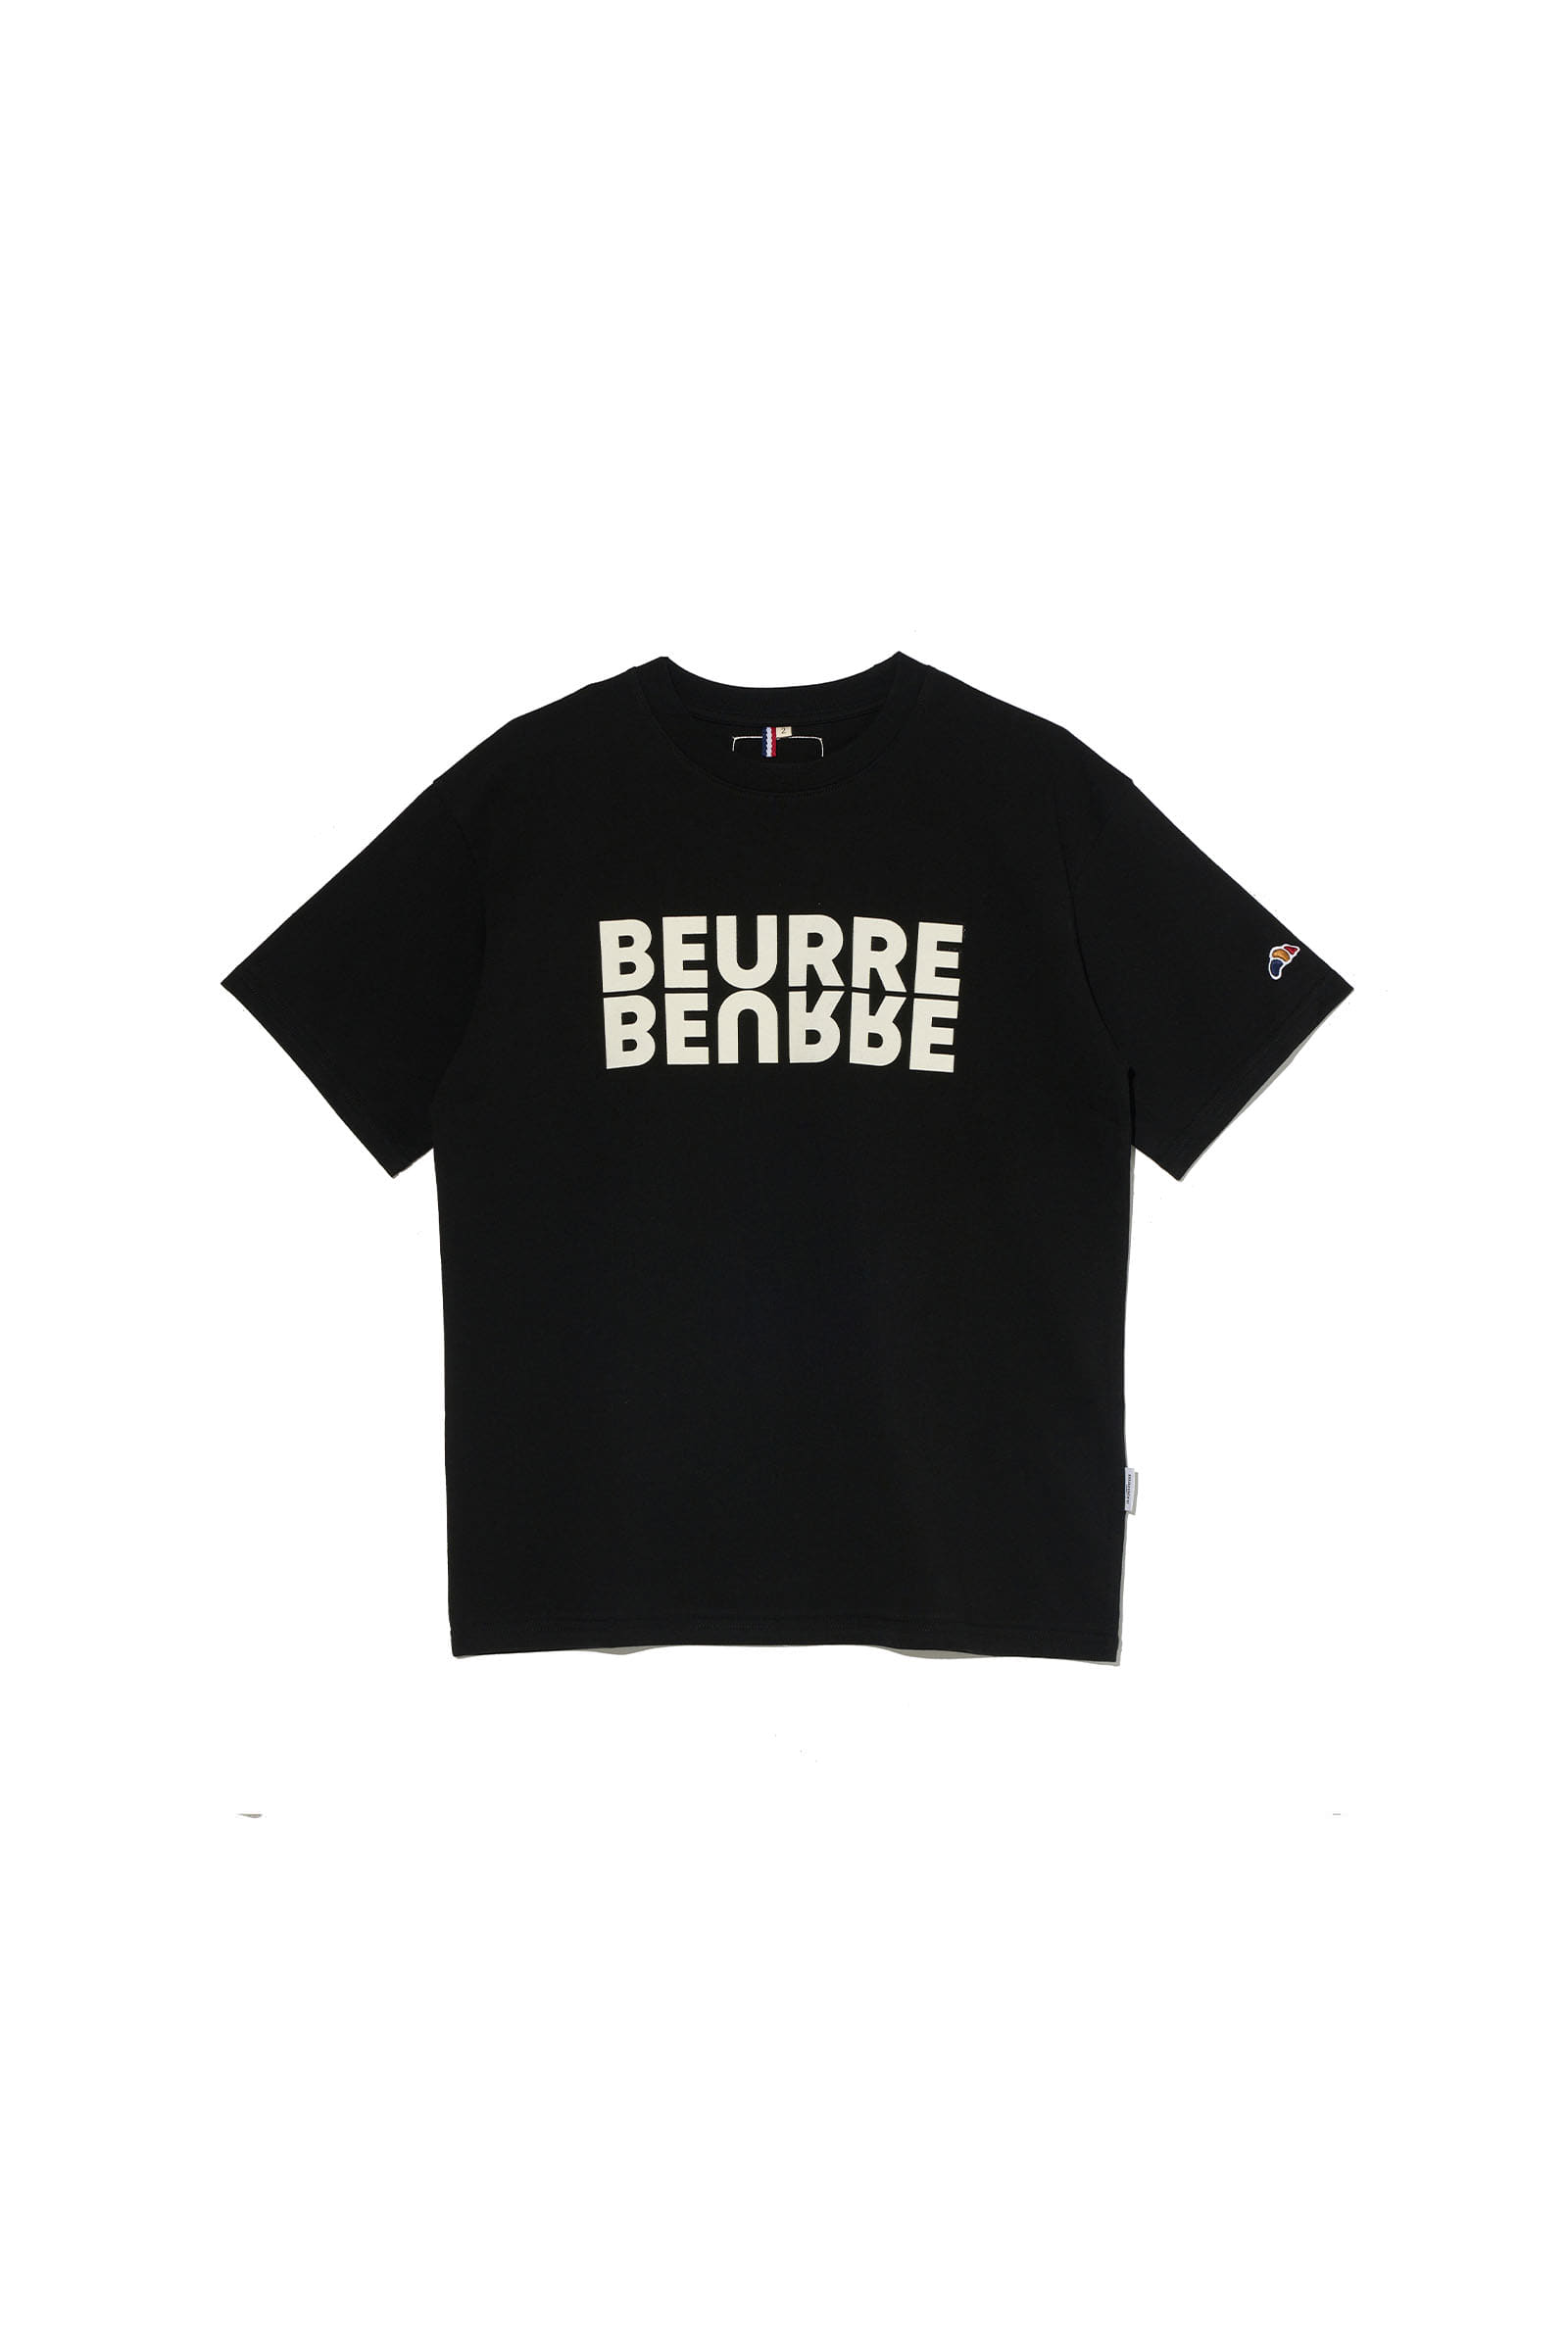 ep.6 BEURRE Decalcomanie T-shirts (Black)